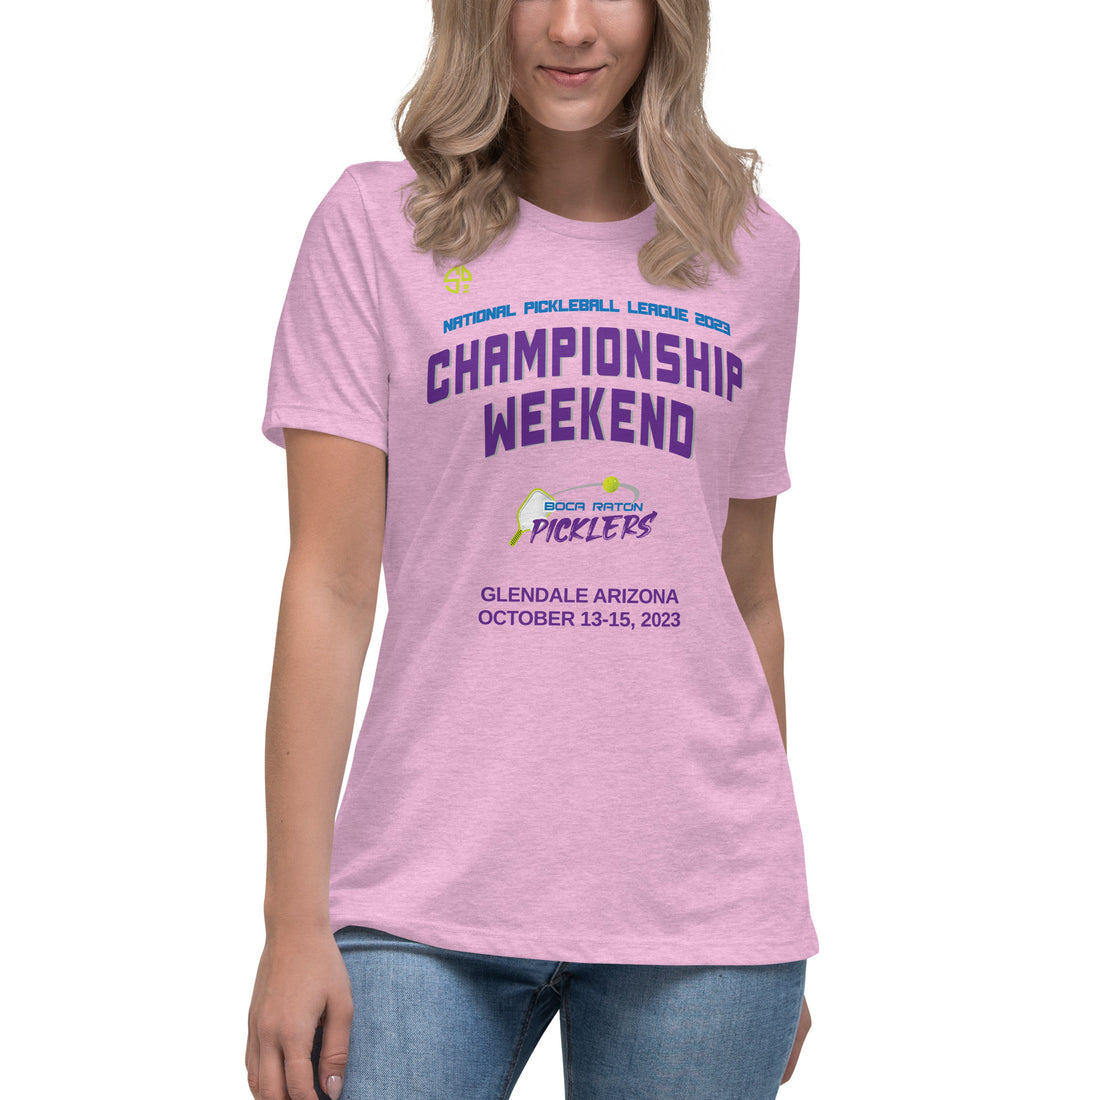 BOCA RATON PICKLERS™ NPL™ CHAMPIONSHIP WEEKEND - COMMEMORATIVE SHIRT! Women's Relaxed T-Shirt